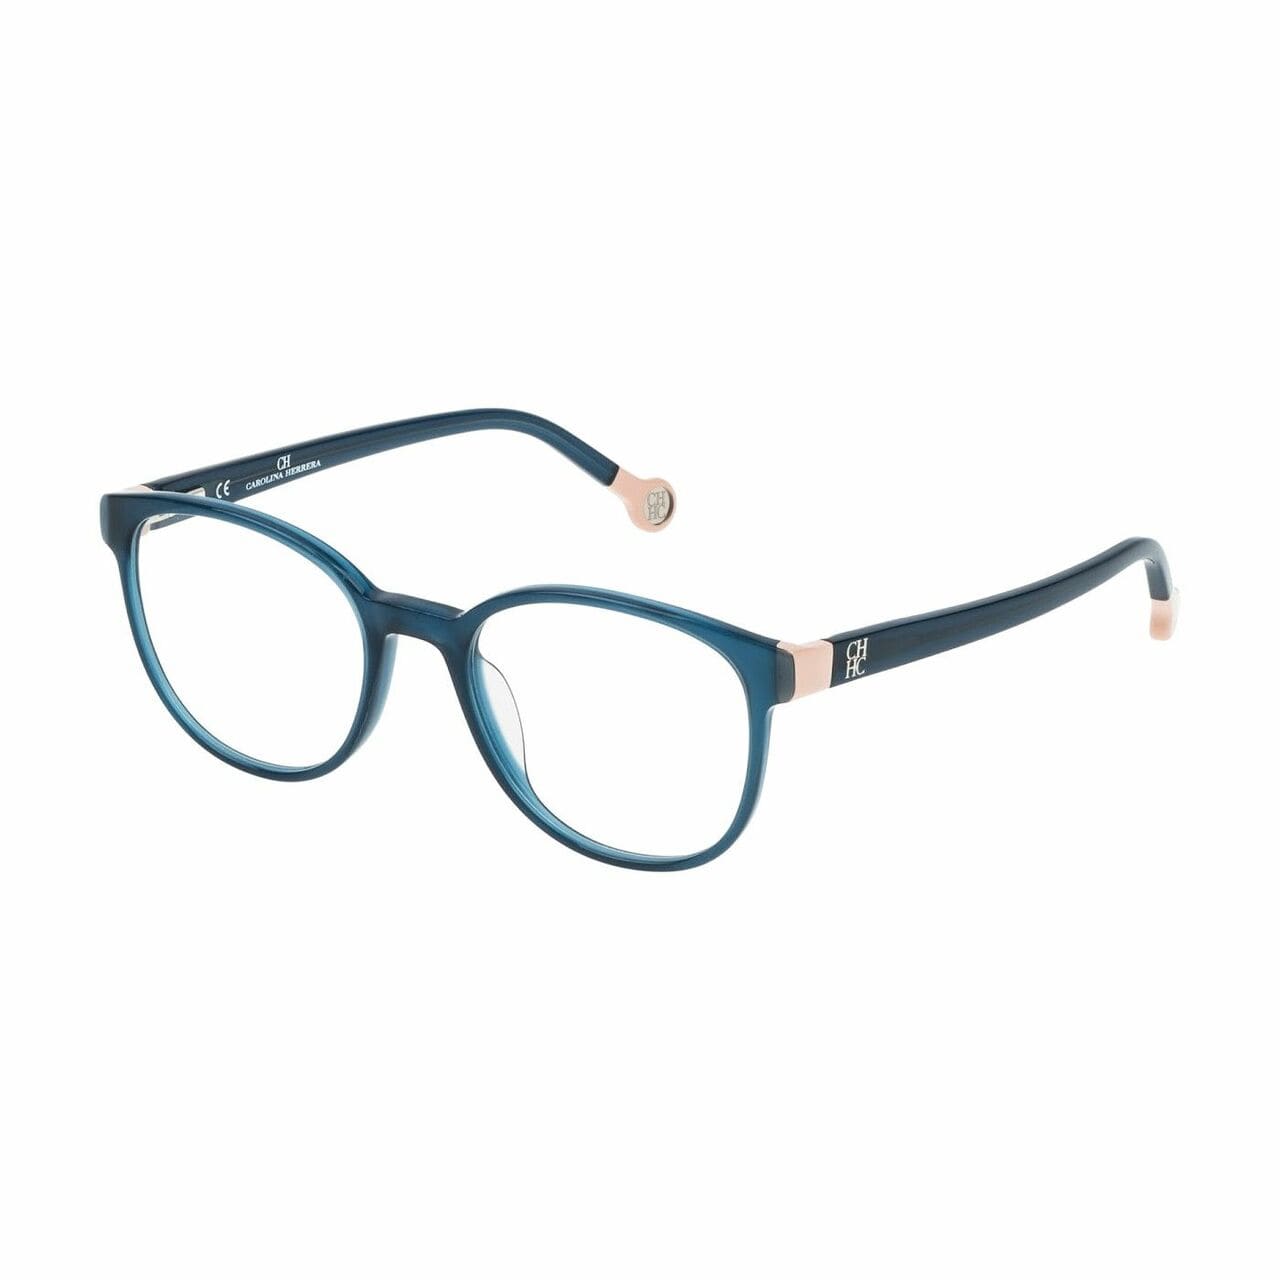 Carolina Herrera VHE680-0U36 Blue Square Women's Plastic Eyeglasses